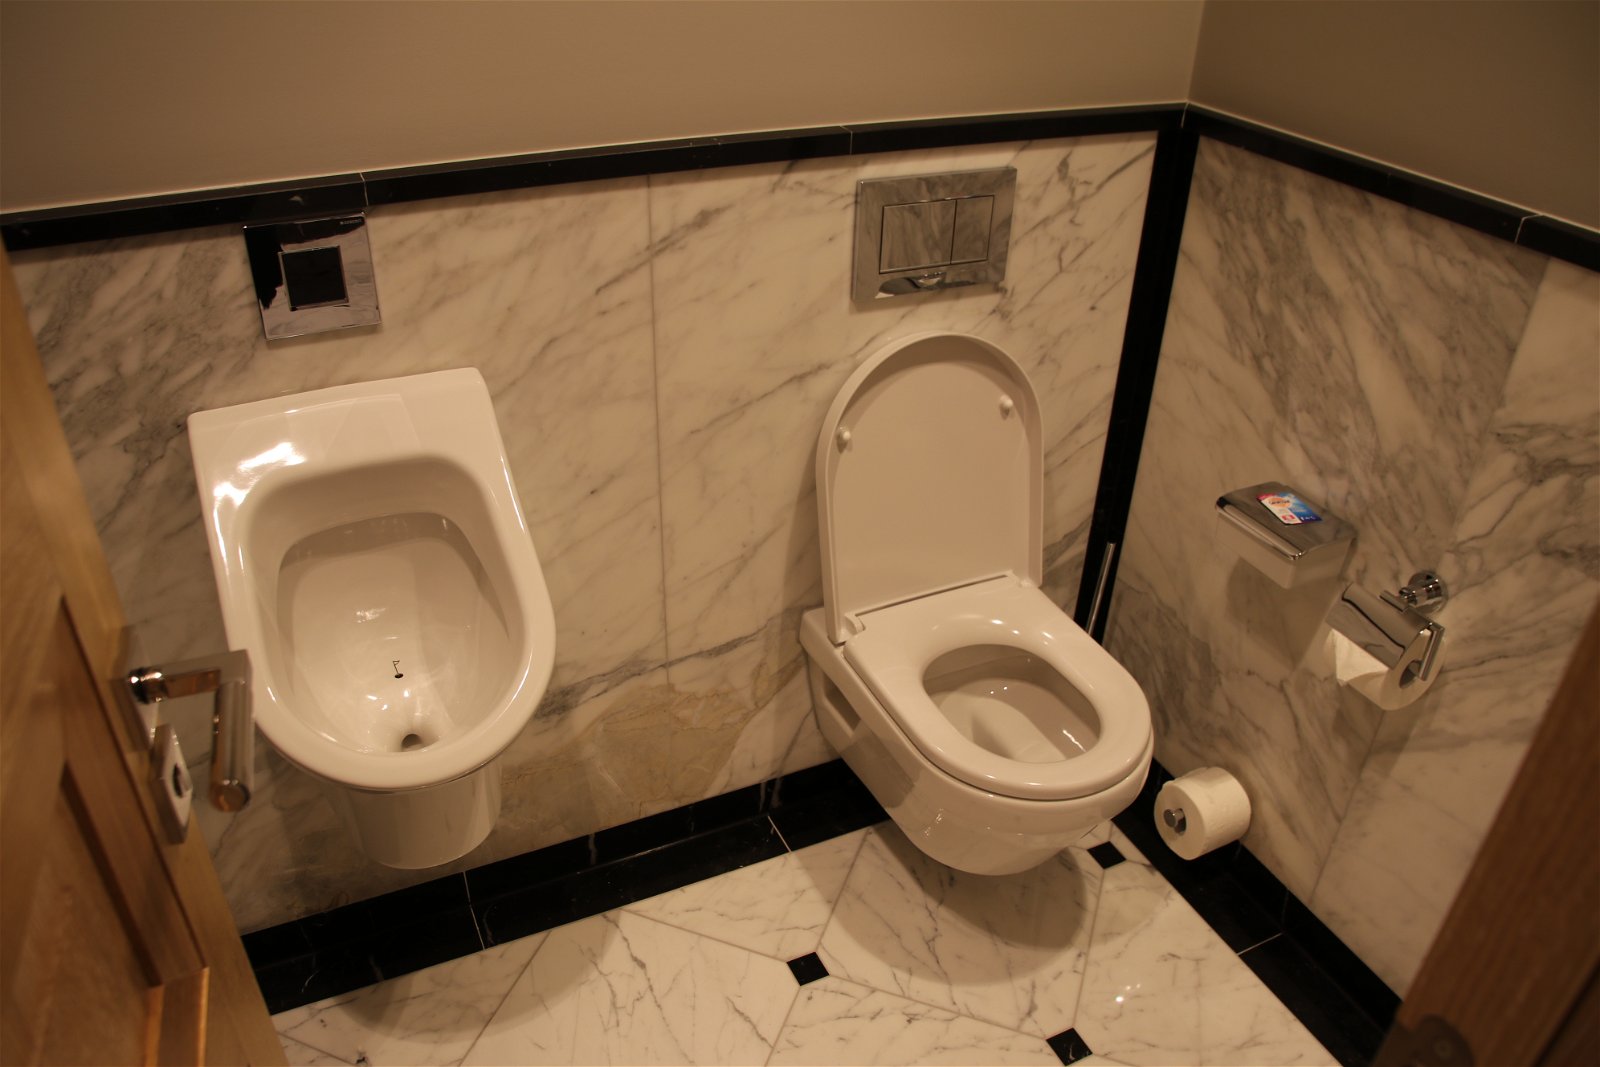 Frankfurt Airport VIP lounge restrooms